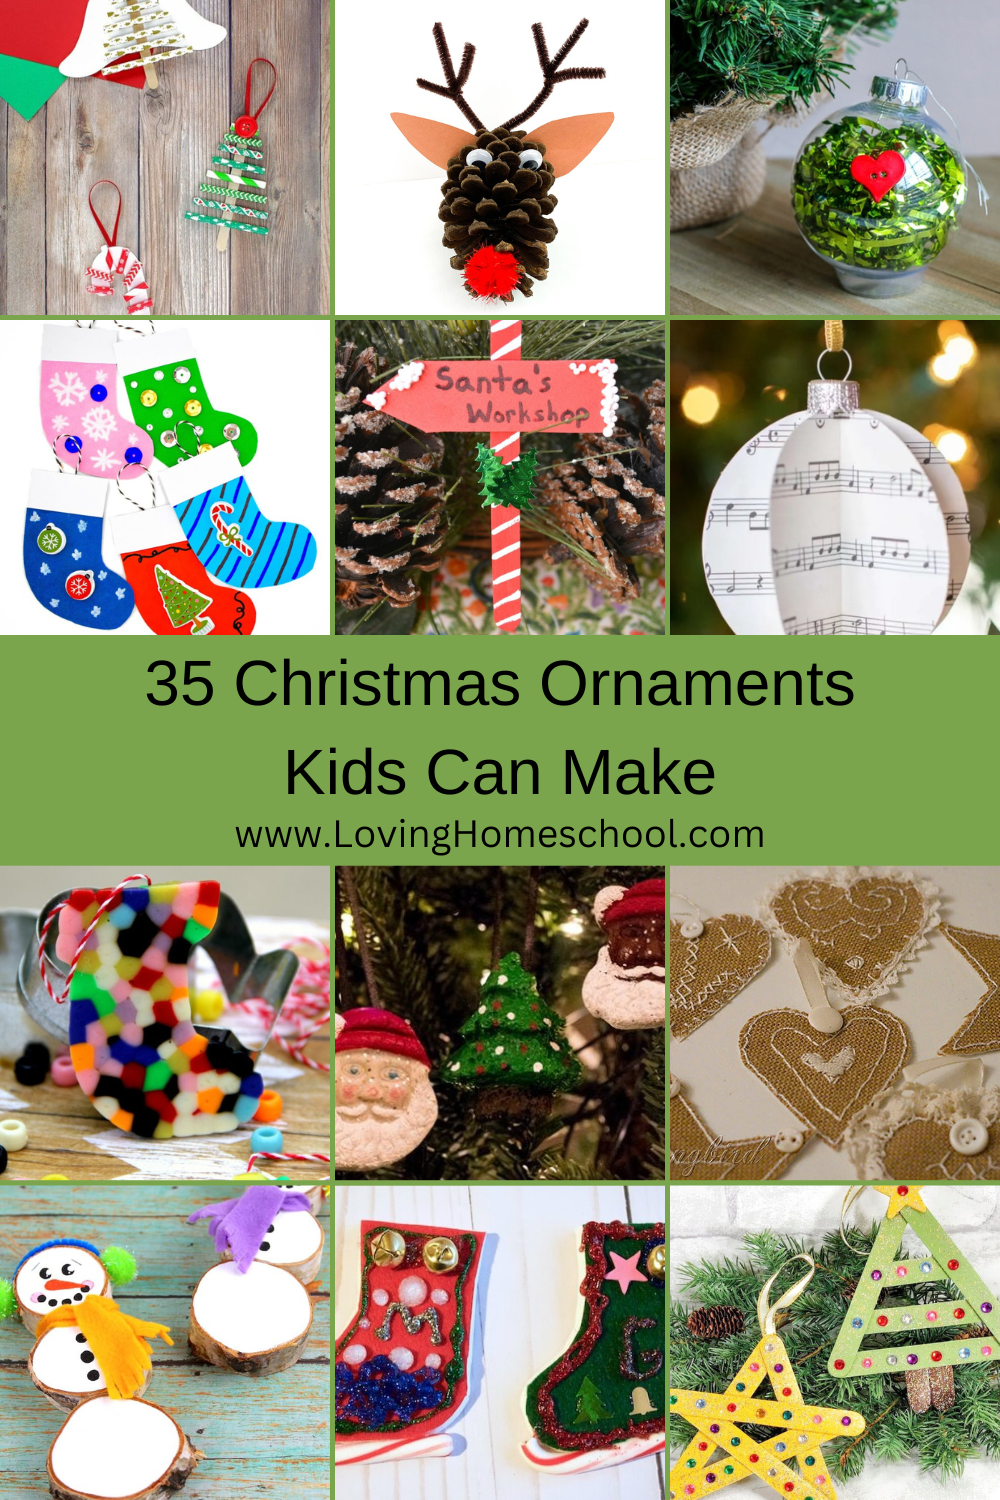 35 Christmas Ornaments Kids Can Make Pinterest Pin